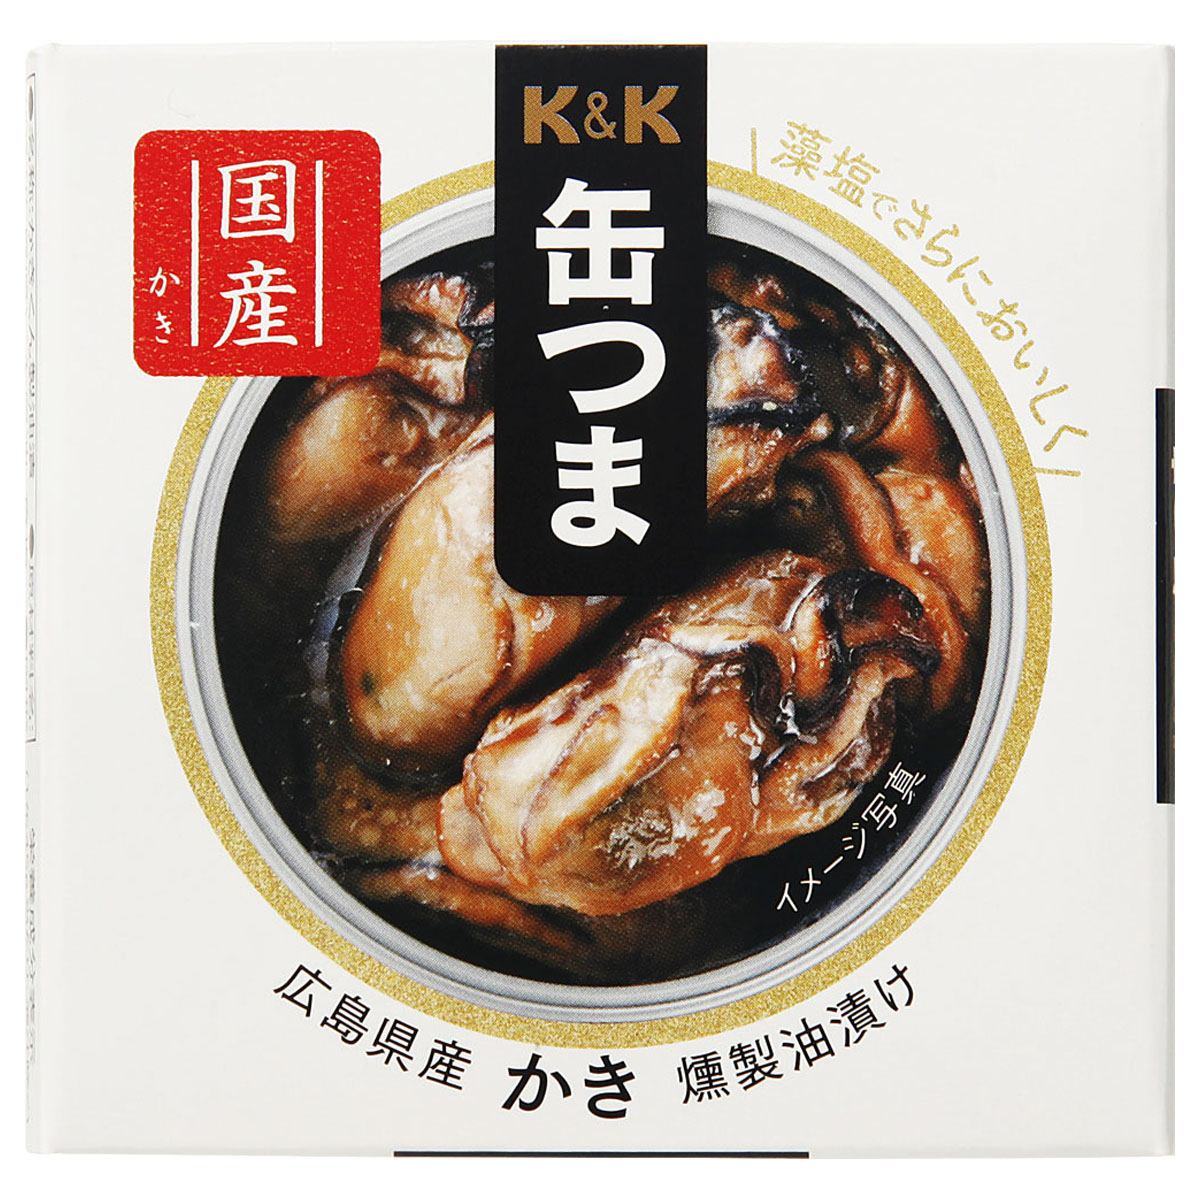 K&K 缶つま 広島県産 かき燻製油漬け 60g x6